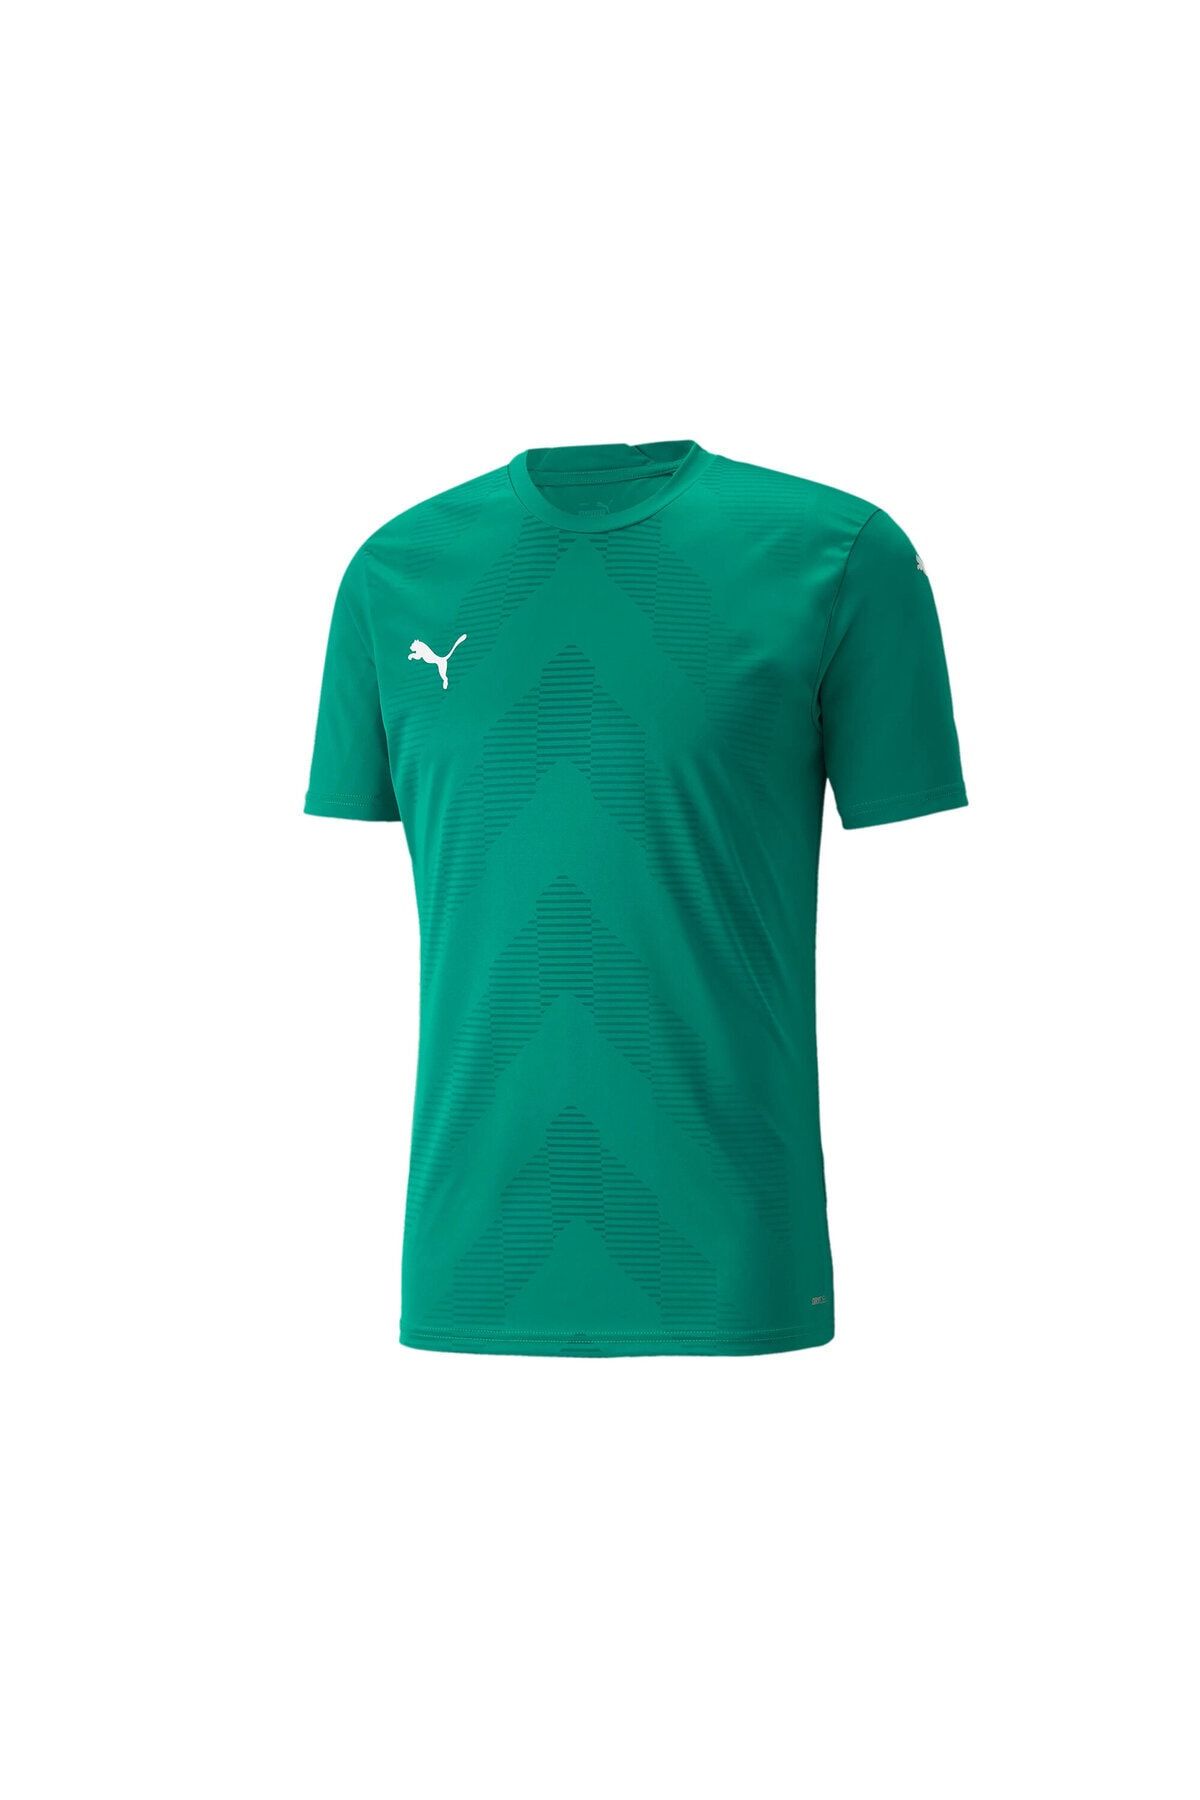 Puma Teamglory Jersey Erkek Futbol Forması 70501705 Yeşil